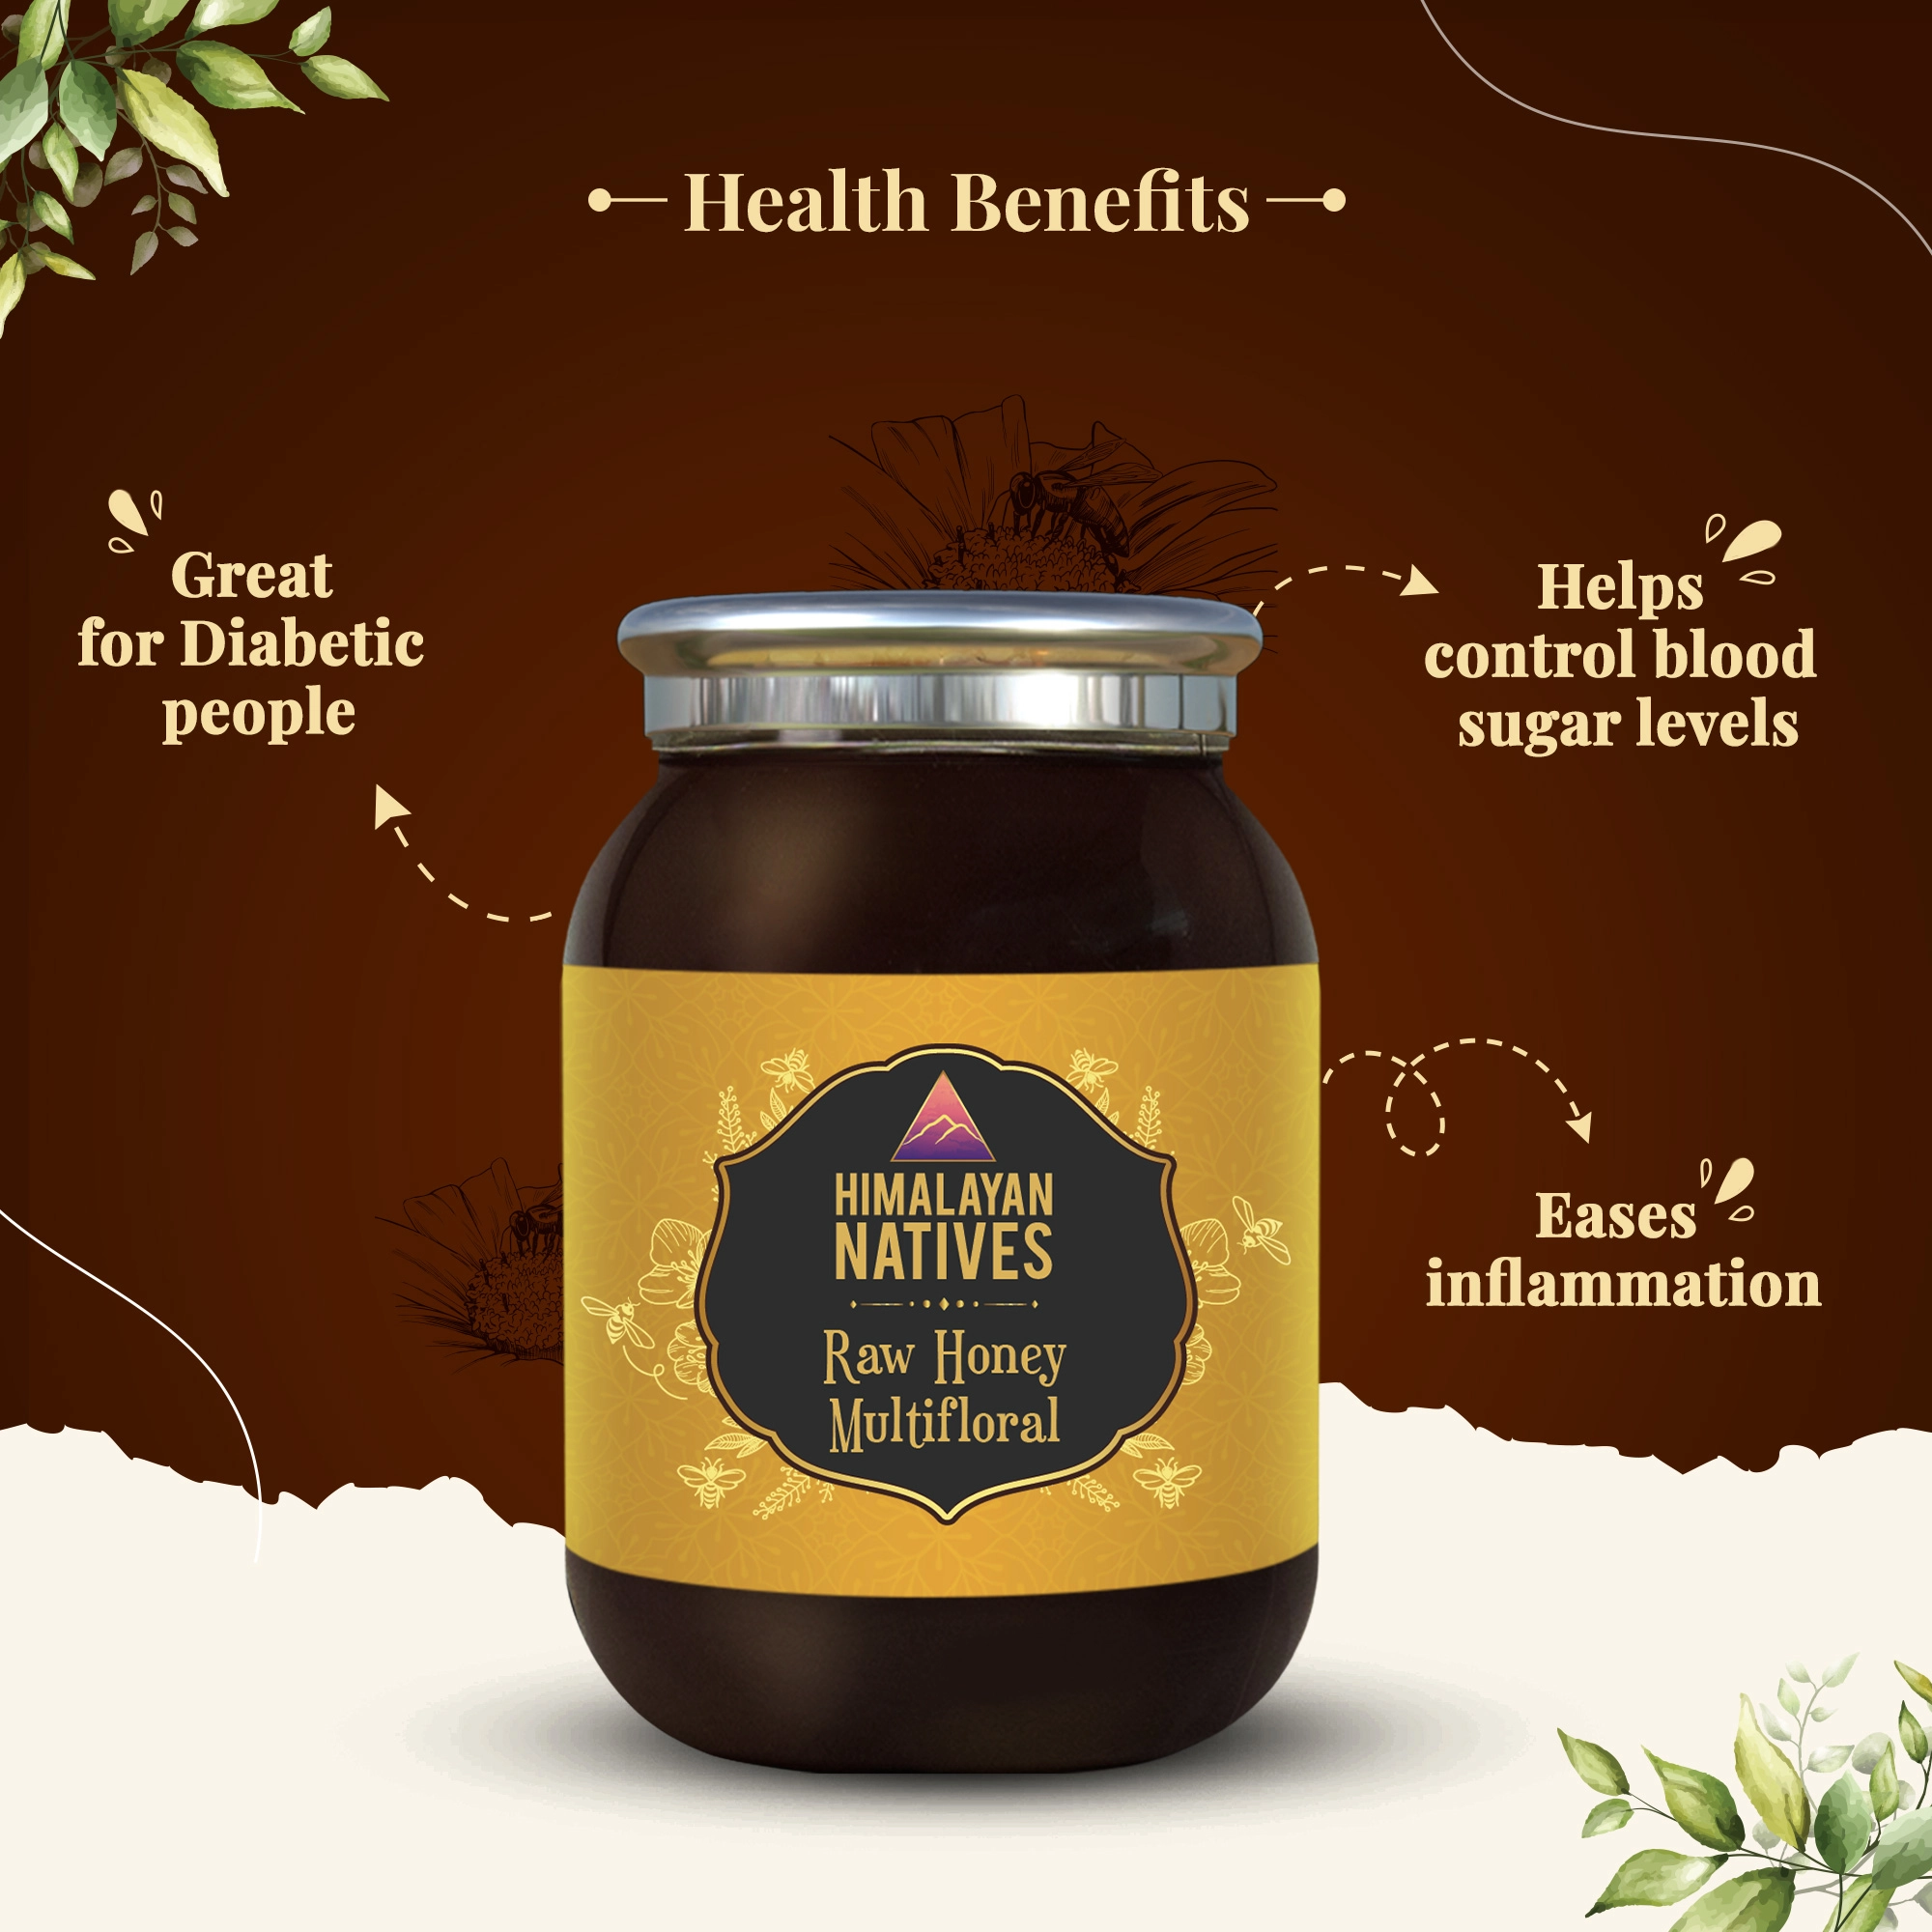 Health Benefits - Raw Honey